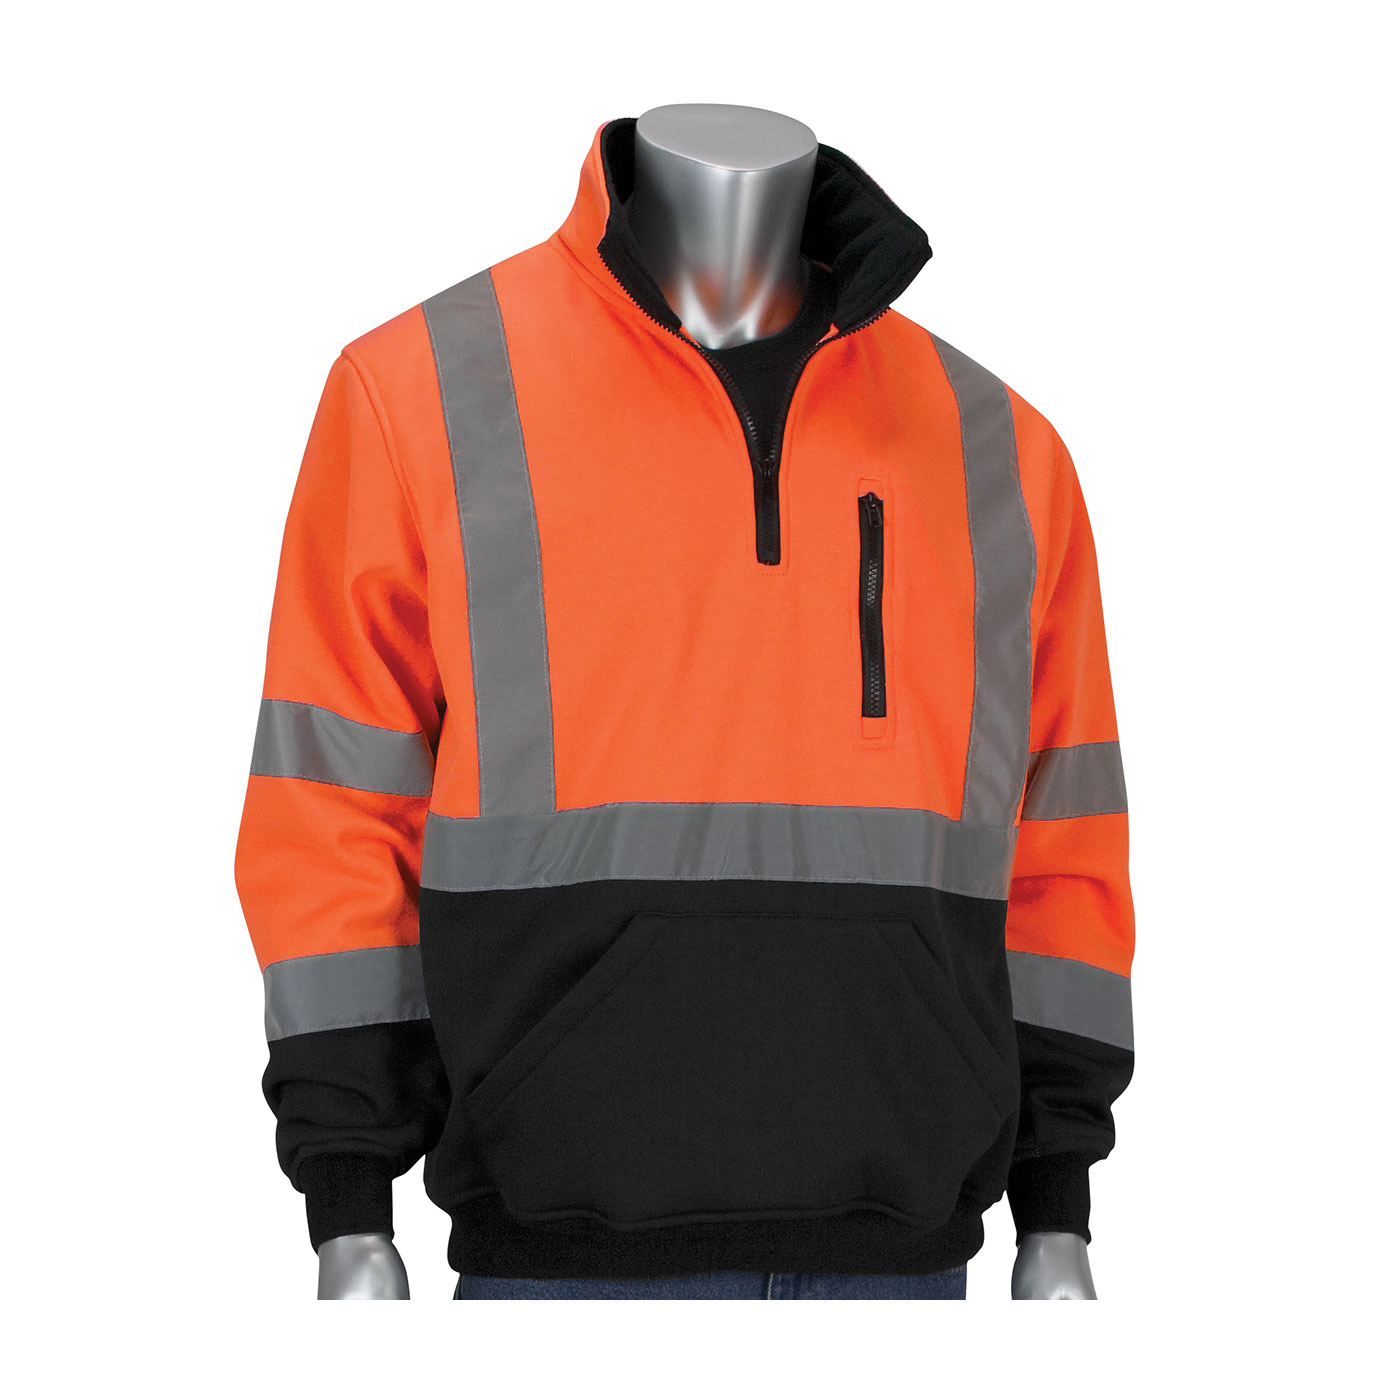 PIP® 323-1330B-OR/2X Sweatshirt With Black Bottom, Unisex, 2XL, Orange, 31-1/2 in L, Polyester Fleece